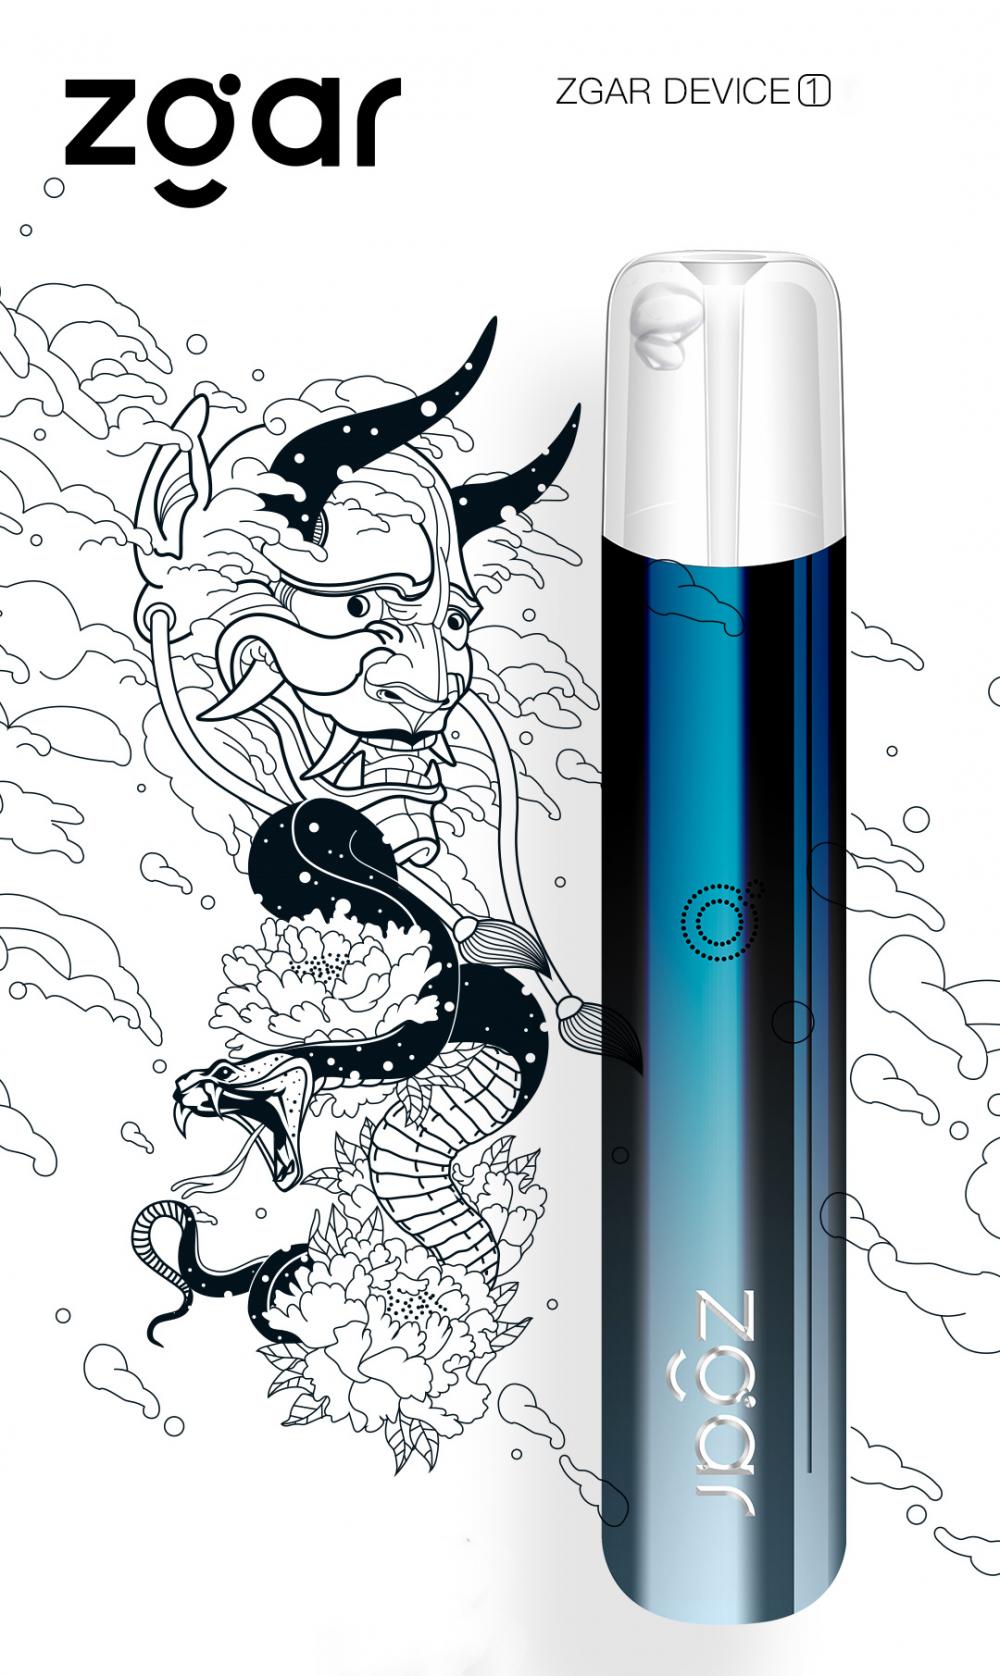 Hot selling e-cigarette vape pods vaporizer pen kit